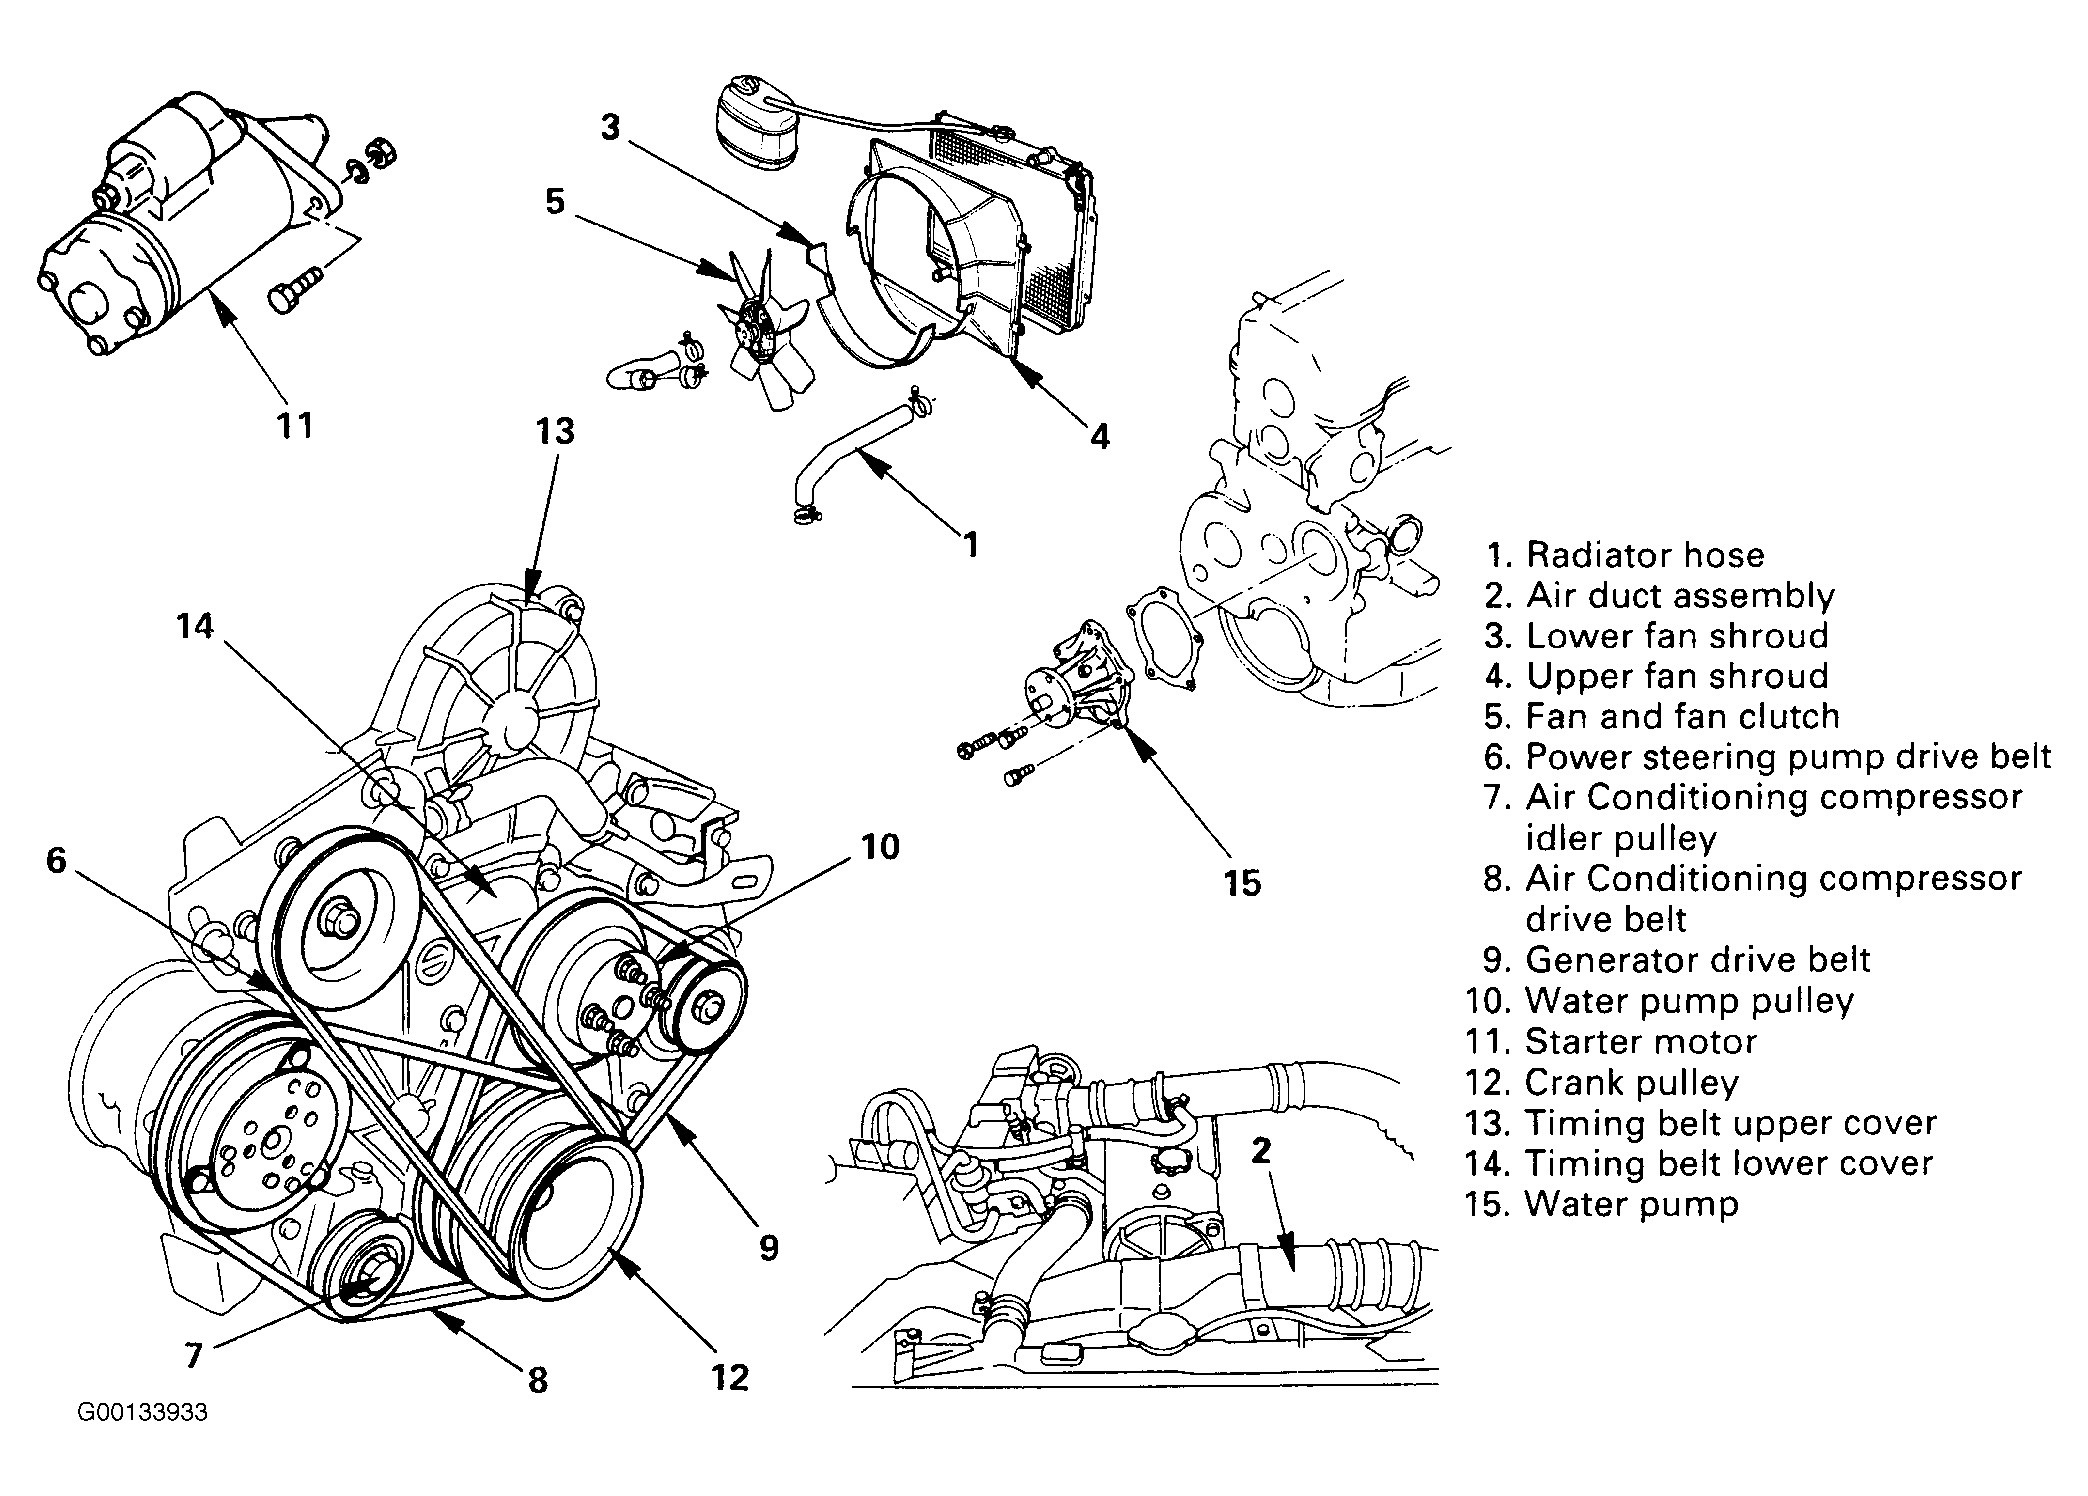 1996 isuzu Rodeo Engine Diagram 1996 isuzu Rodeo Serpentine Belt Routing and Timing Belt Diagrams Of 1996 isuzu Rodeo Engine Diagram